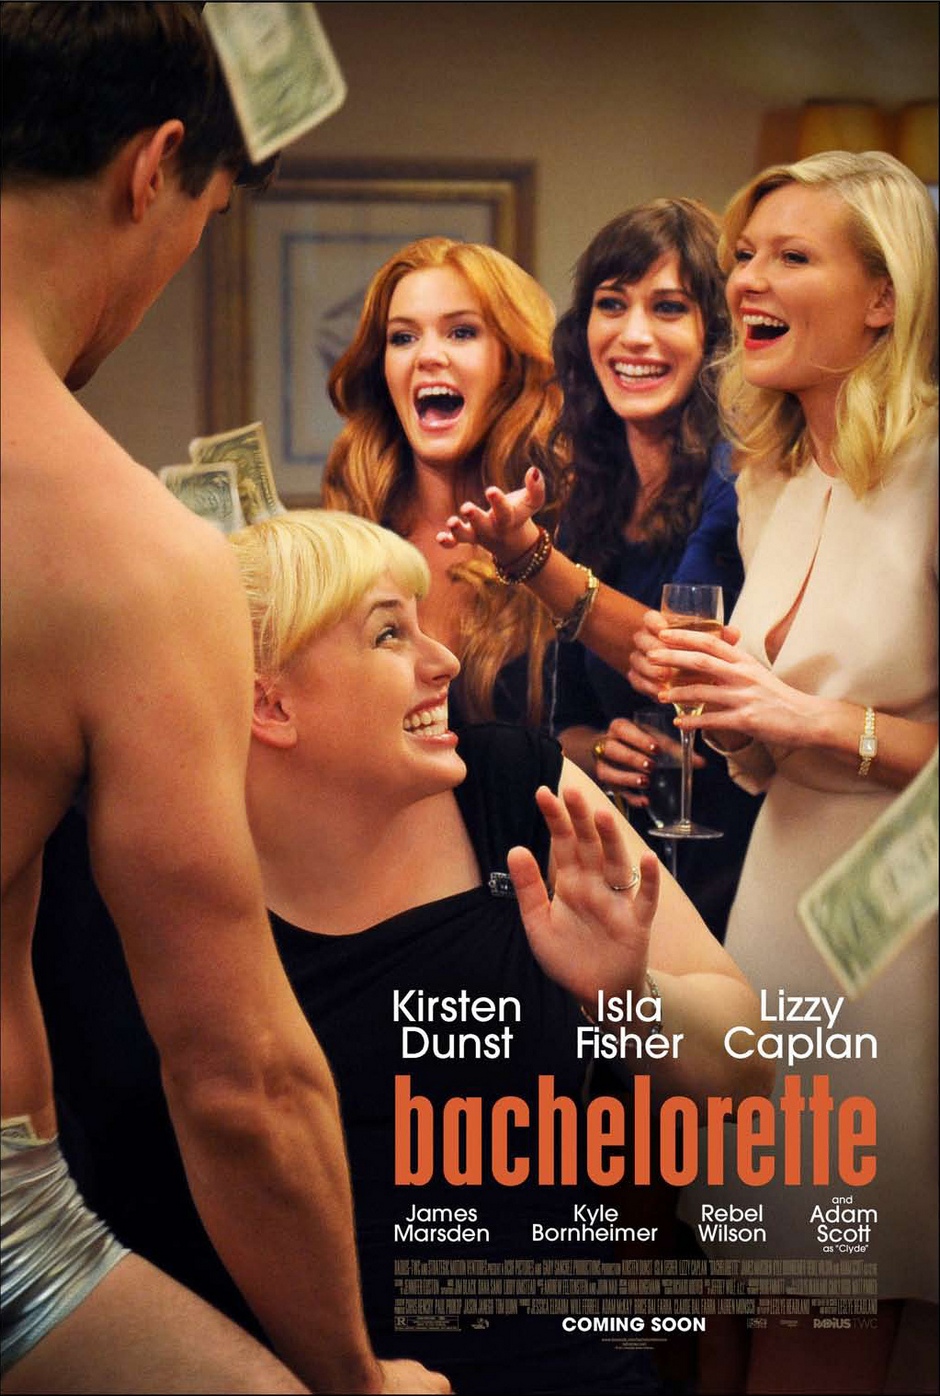 Bachelorette movie